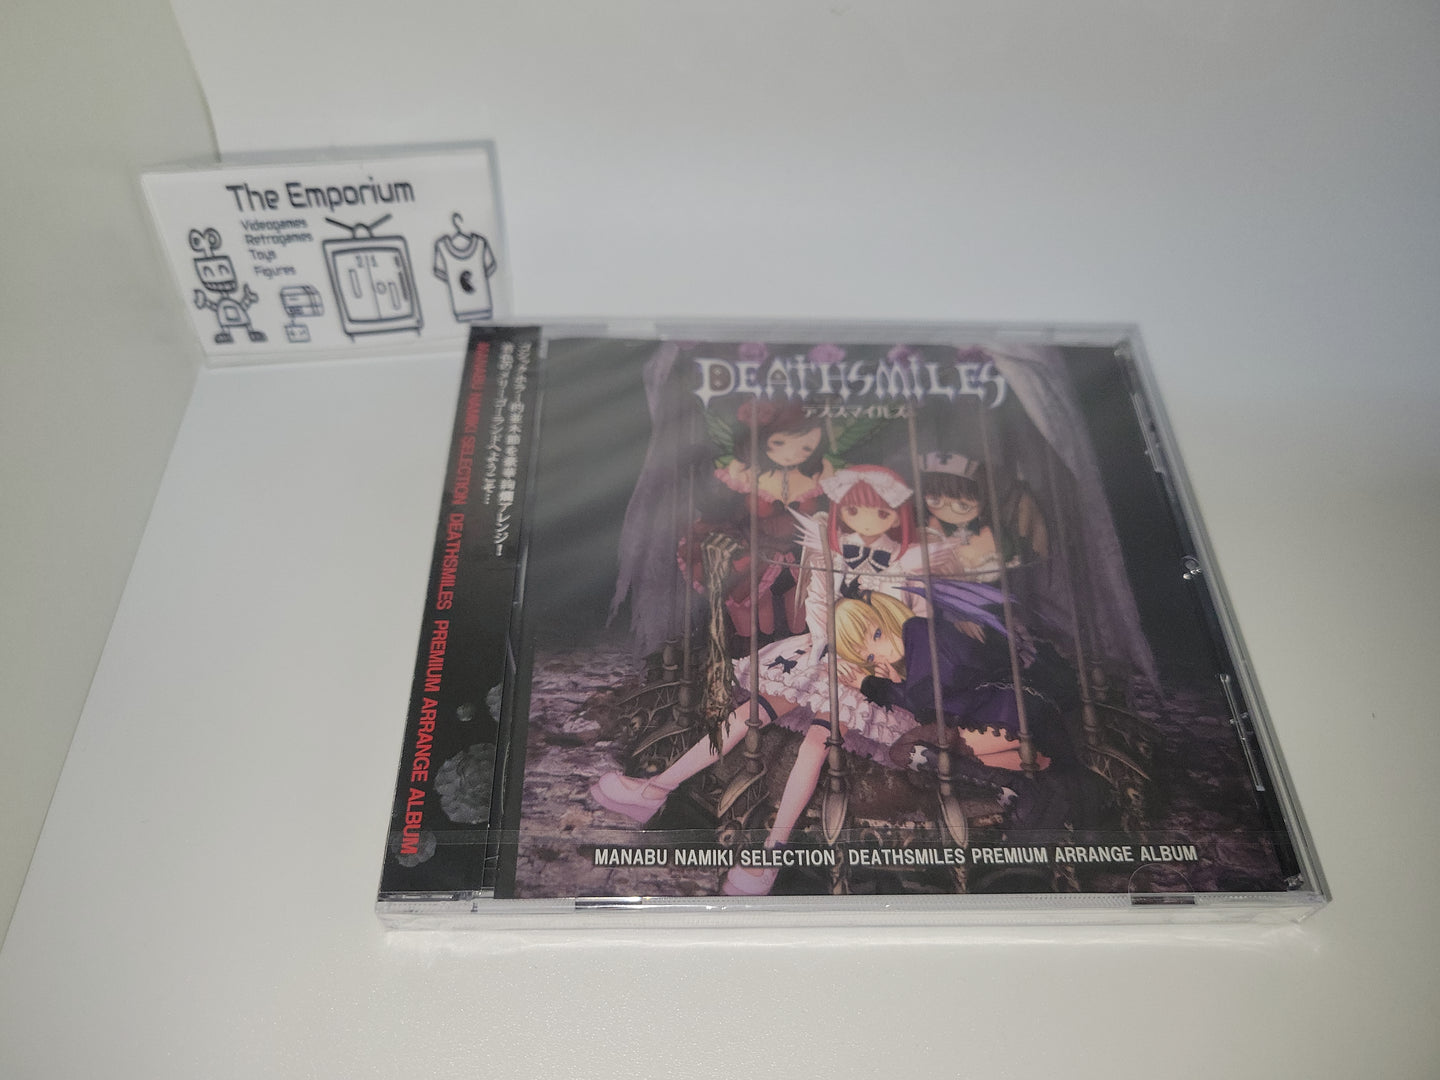 Manabu Namiki Selection Deathsmiles Premium Arrange Album - Music cd soundtrack